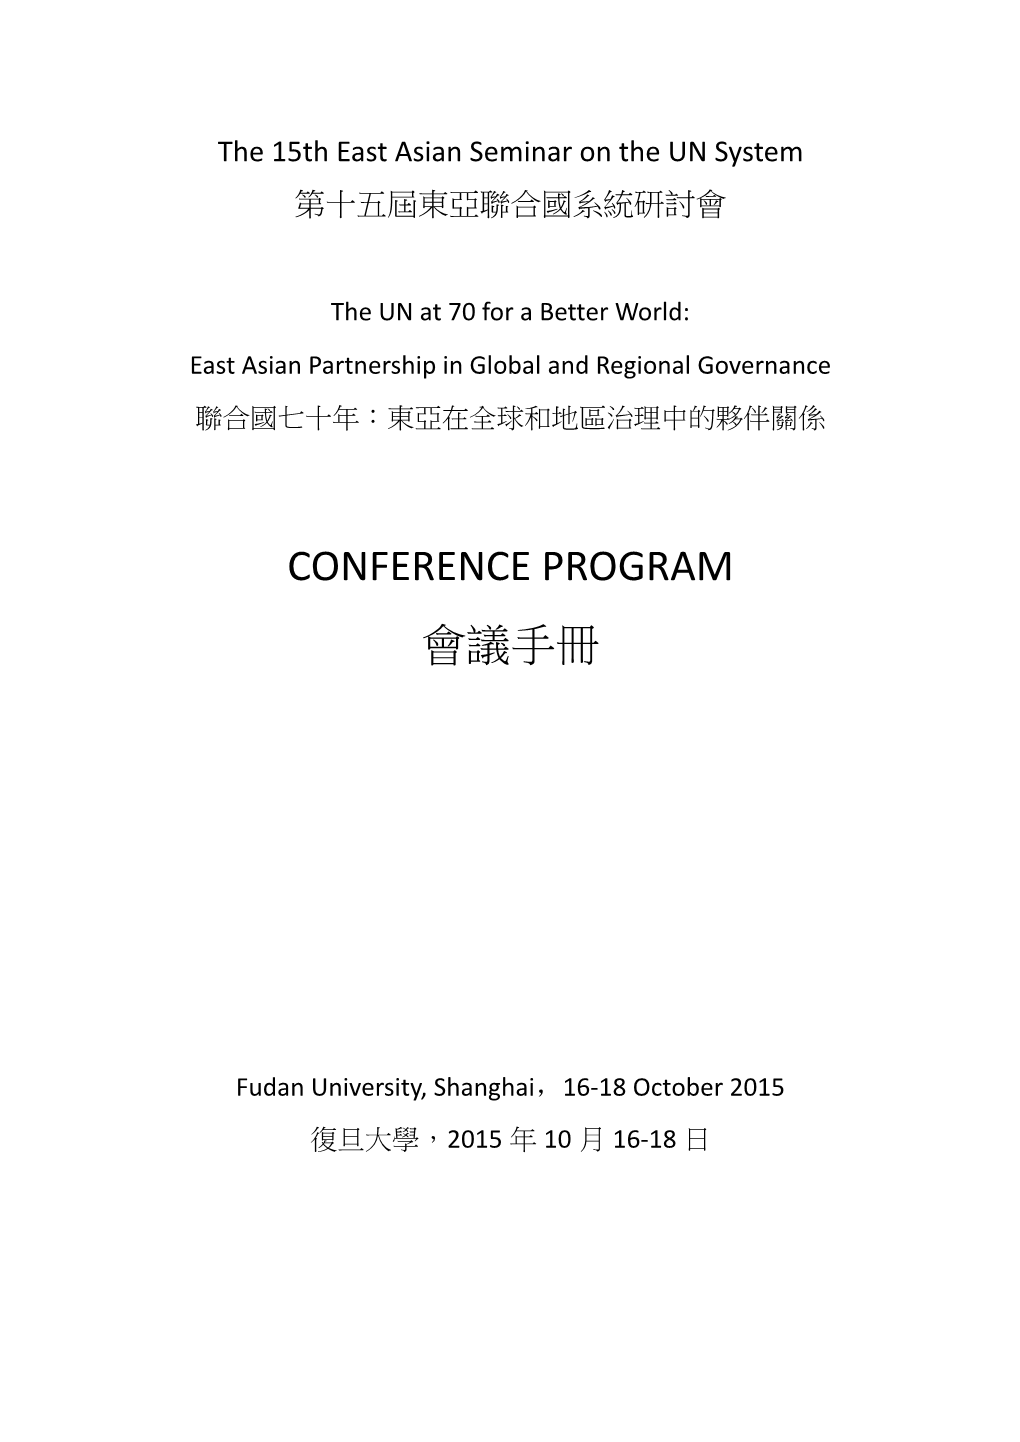 Conference Program 會議手冊